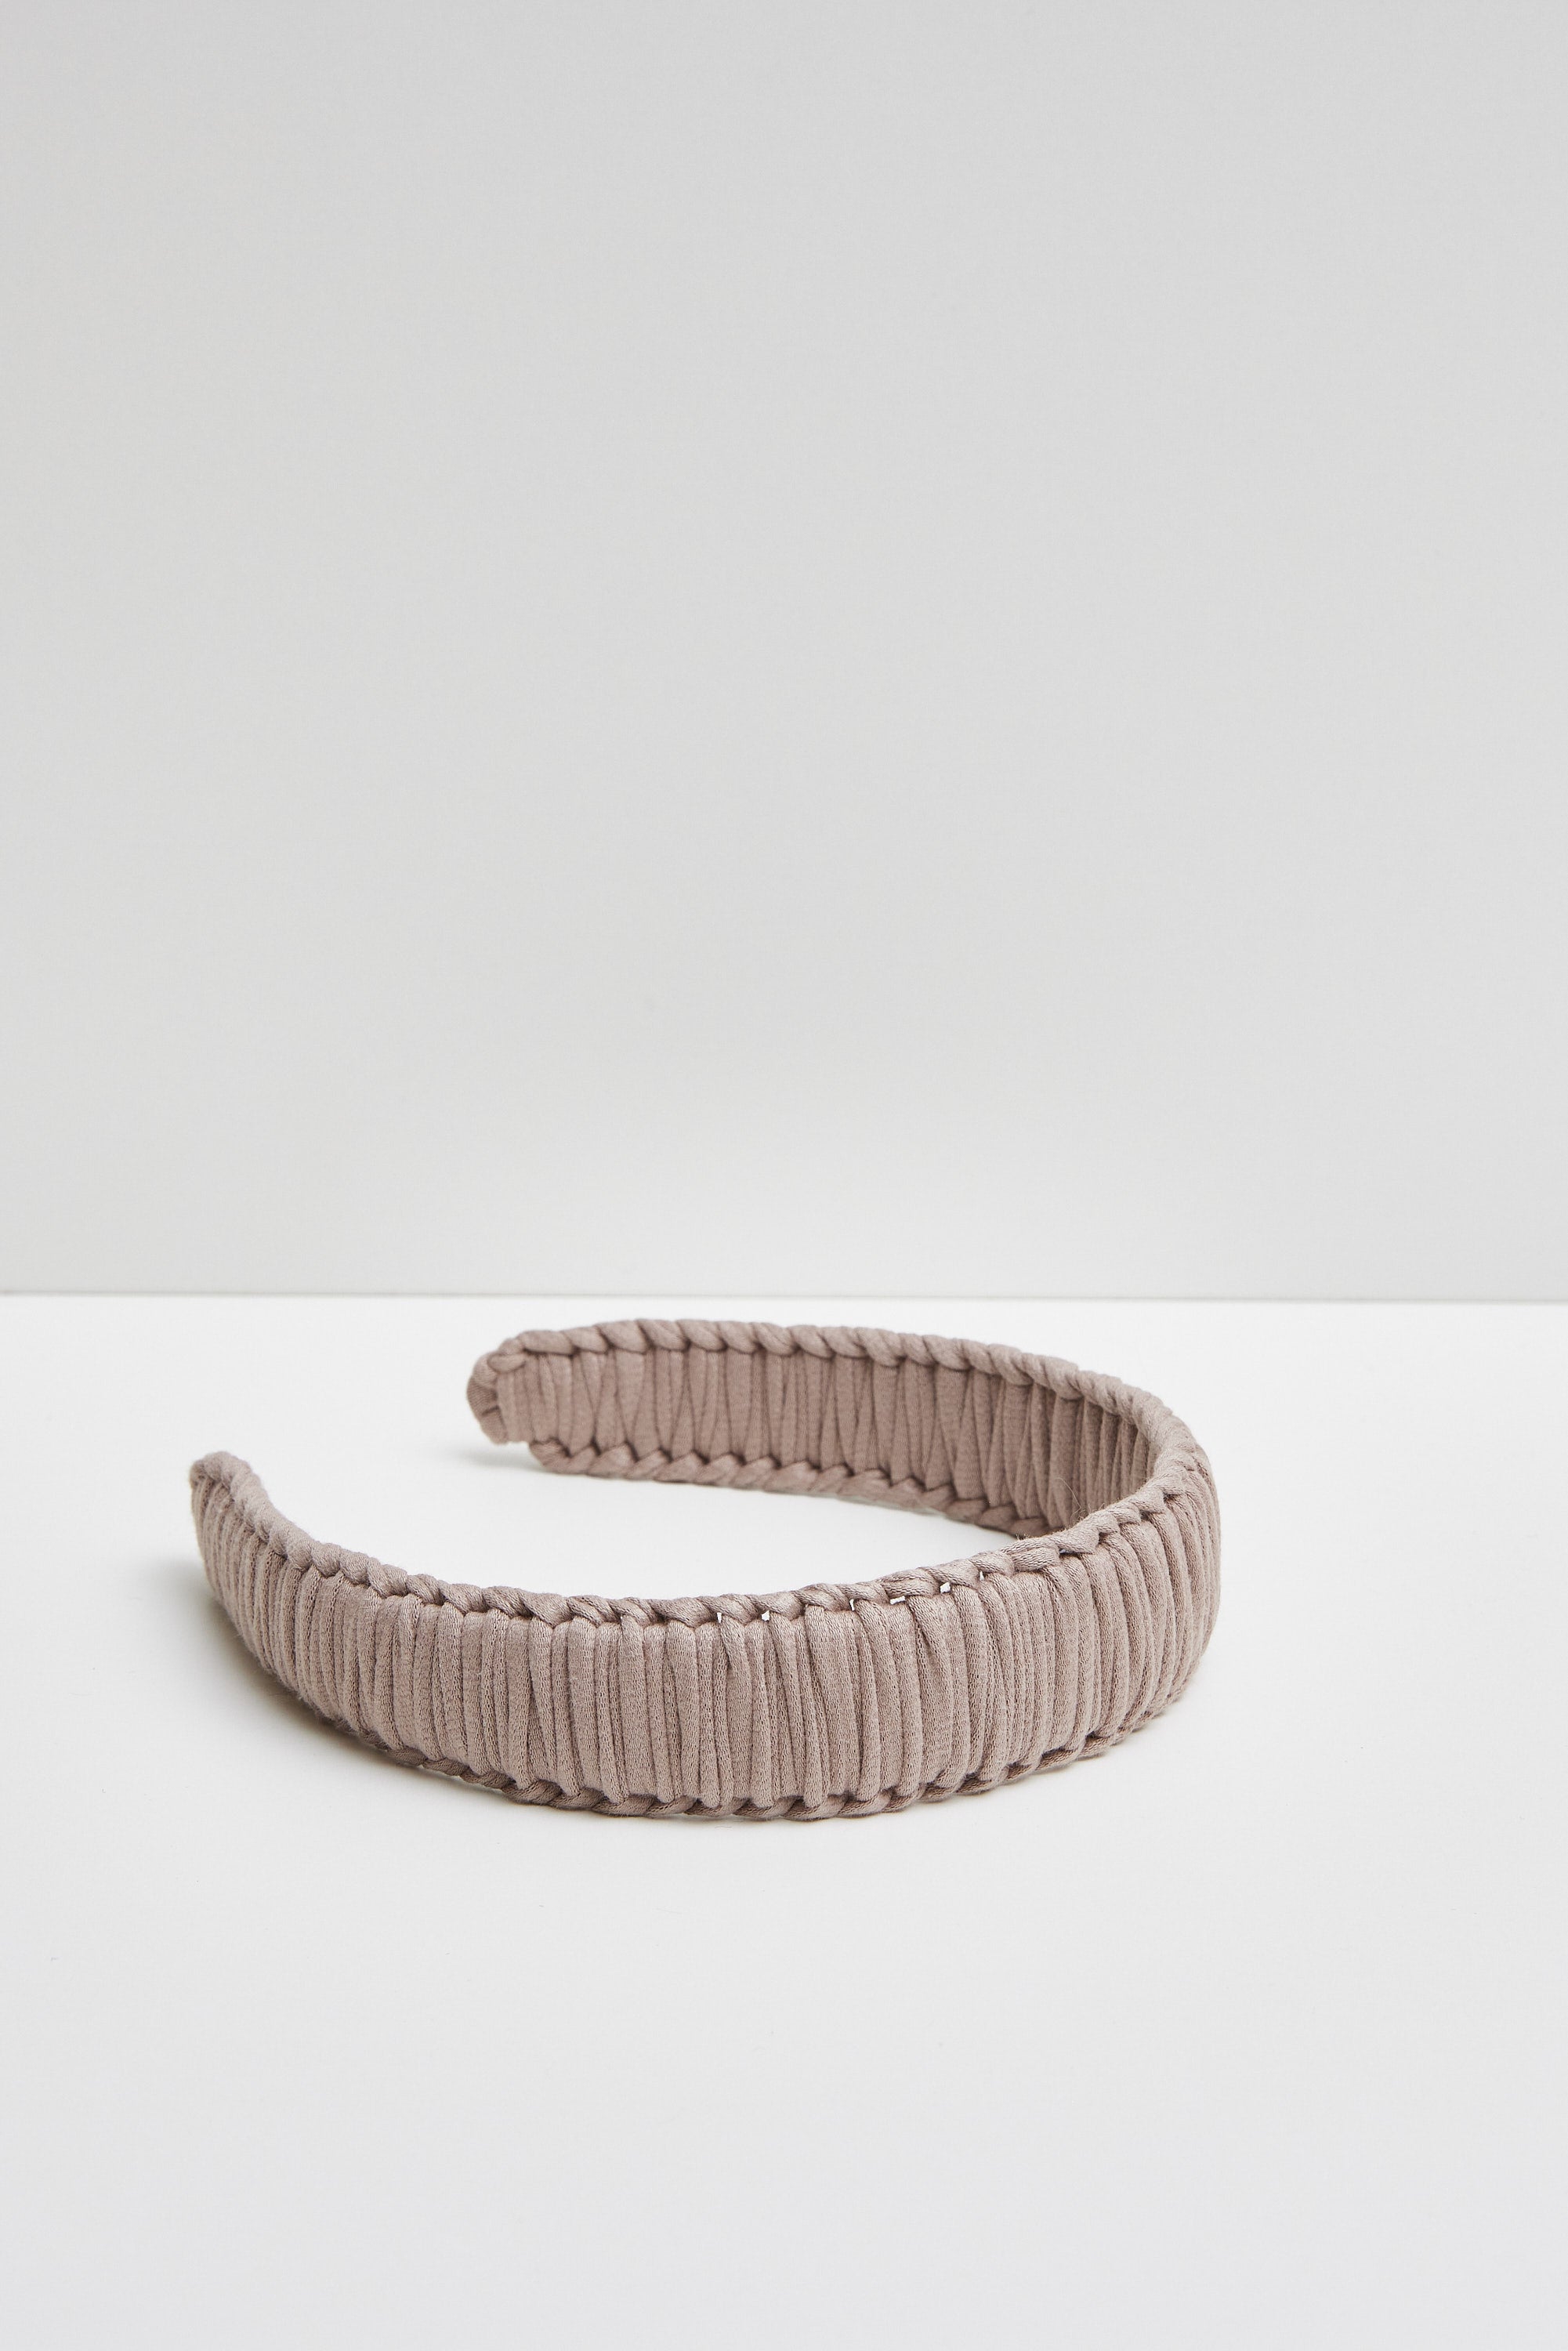 Plicare braided hairband |100% cotton | 7 colour options